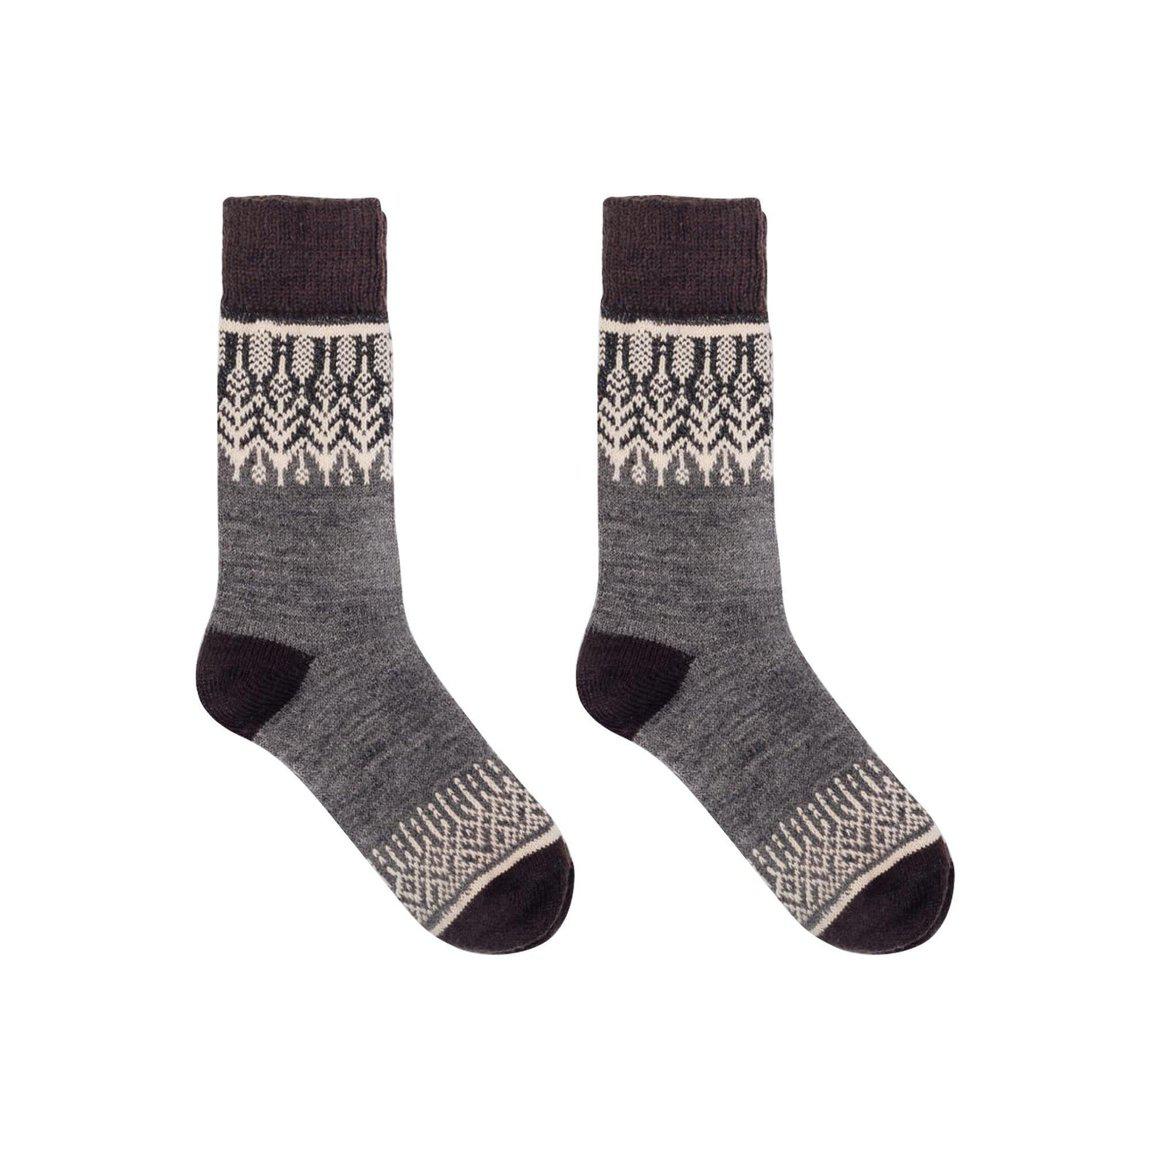 Nordic Wools Merino Yule Socks - Charcoal - Unisex scandinavian 